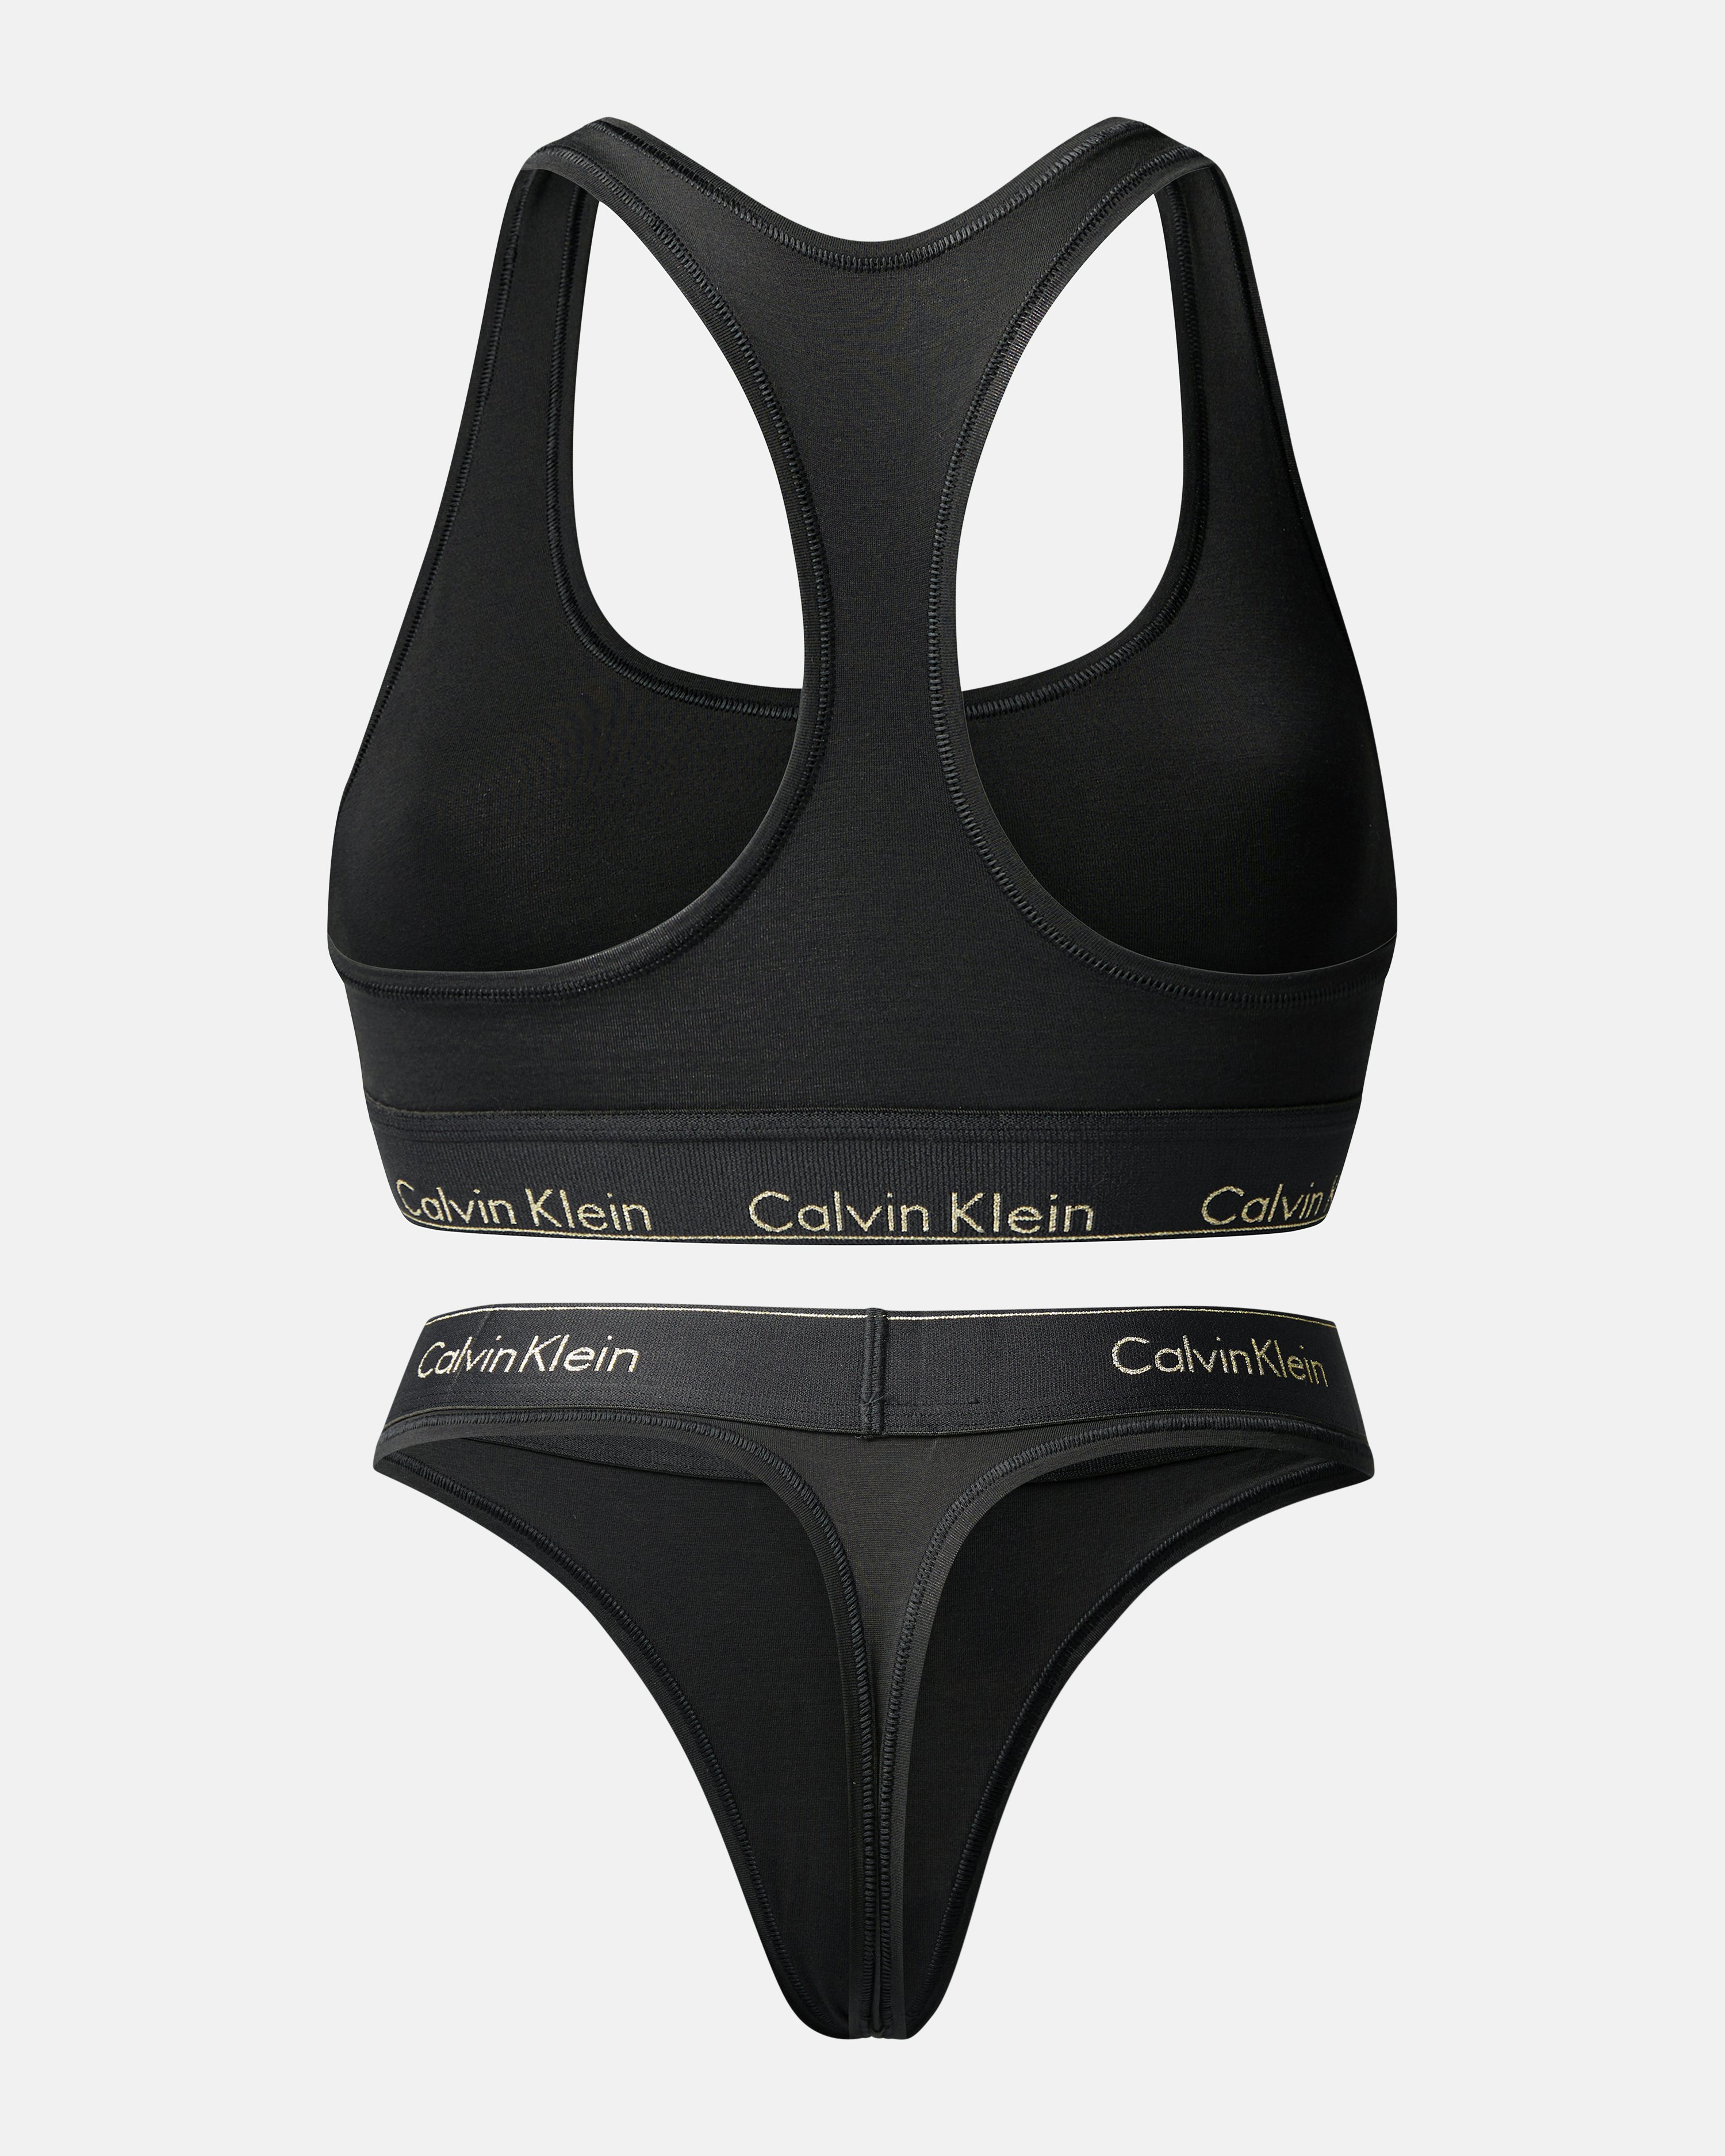 Calvin Klein CK One Originals lingerie set in black